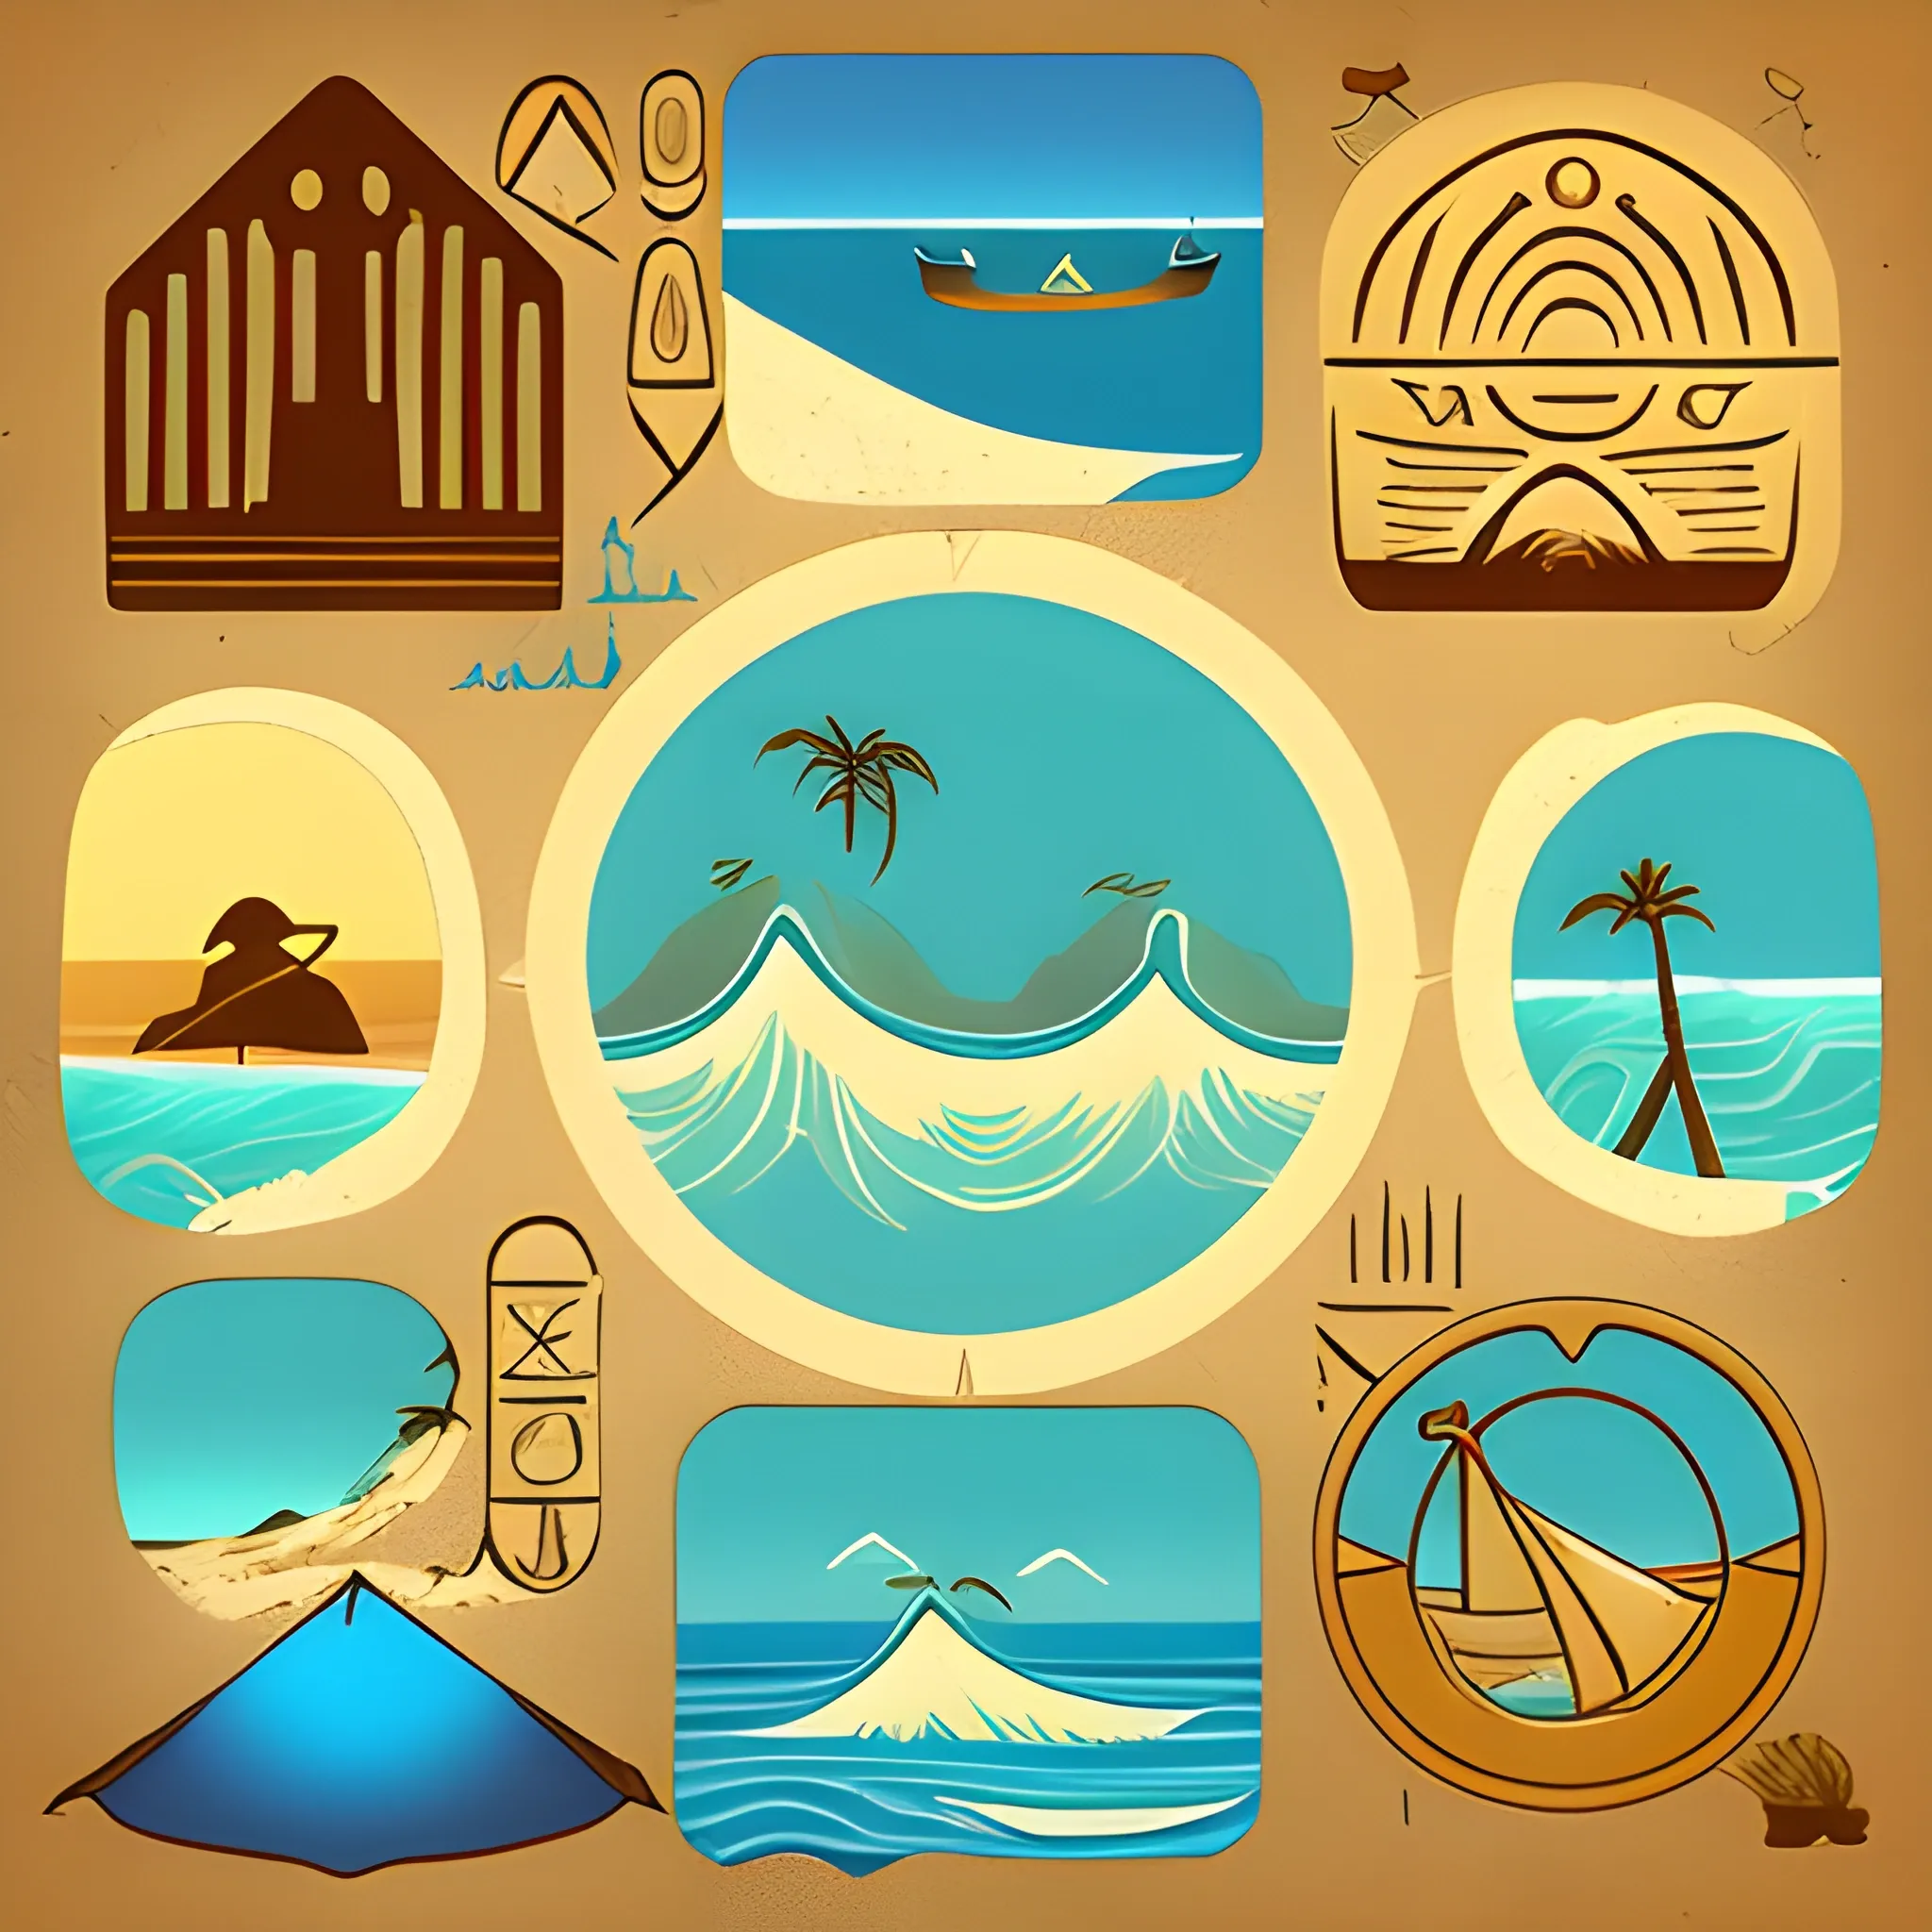 create hieroglyphs to represent travel, adventure, ocean, waves, camping
